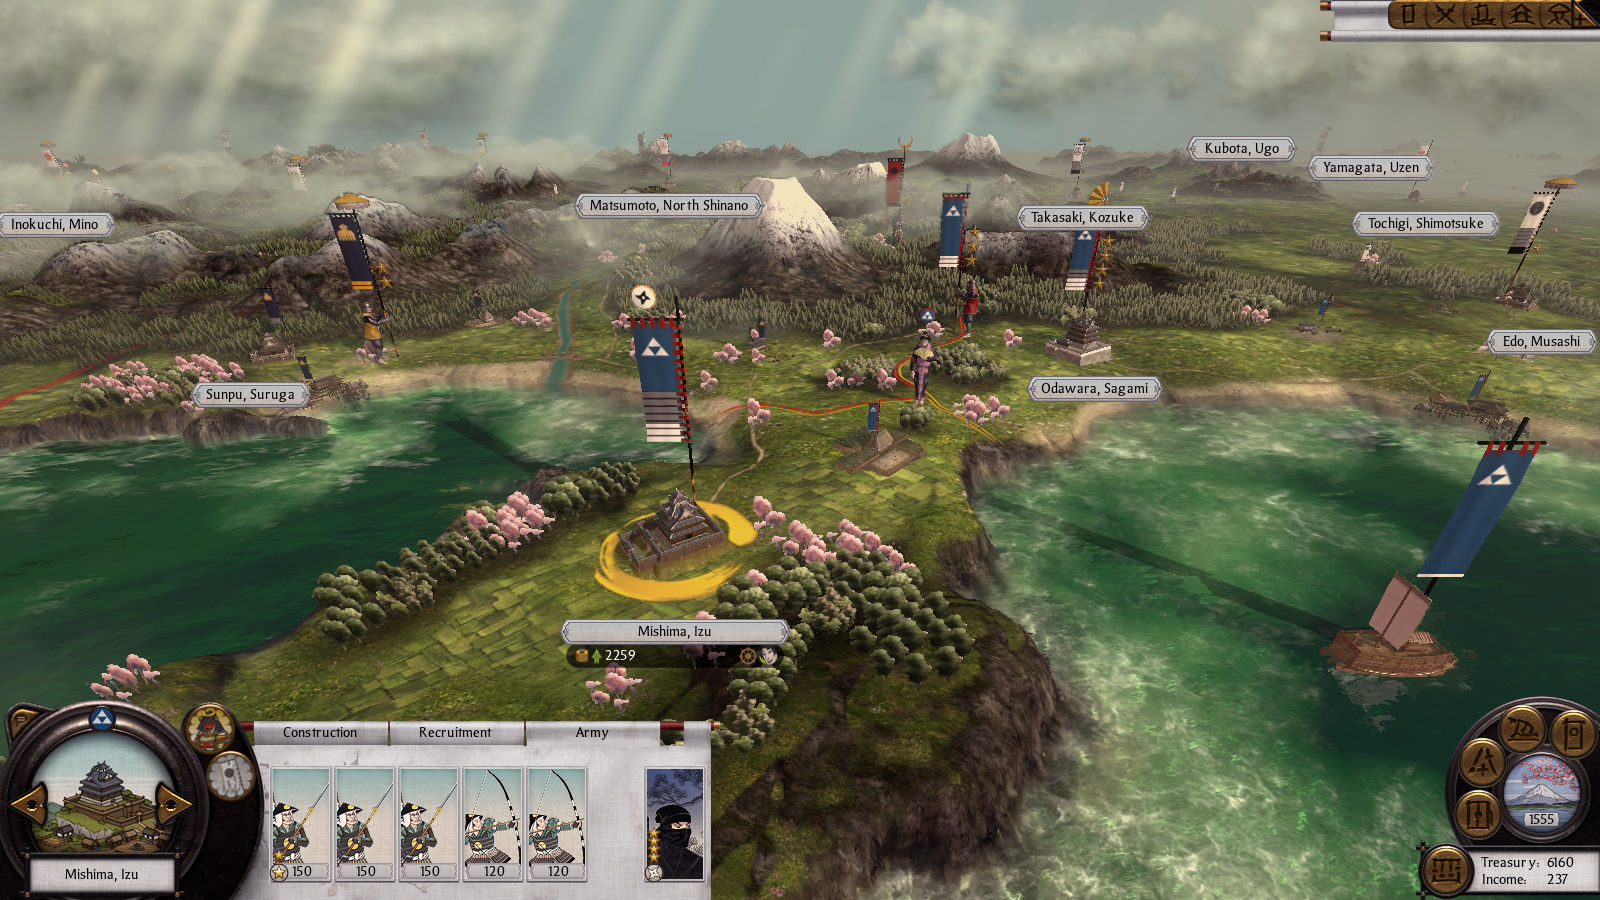 Total War: SHOGUN 2 (Steam Gift RU + CIS) + БОНУС